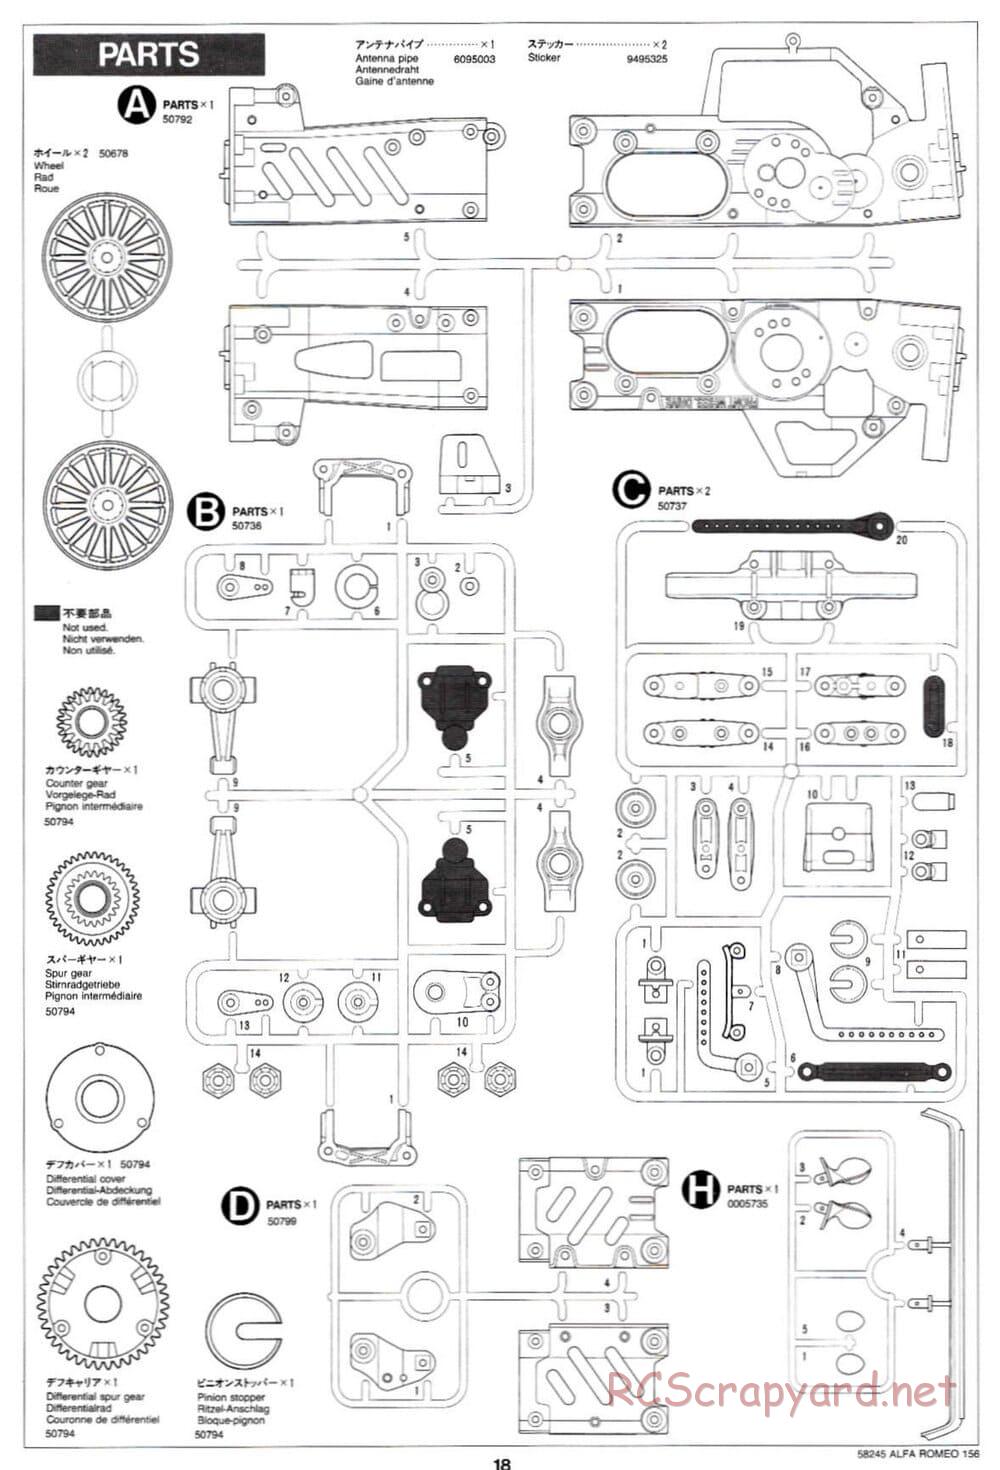 Tamiya - Alfa Romeo 156 Racing - FF-02 Chassis - Manual - Page 18